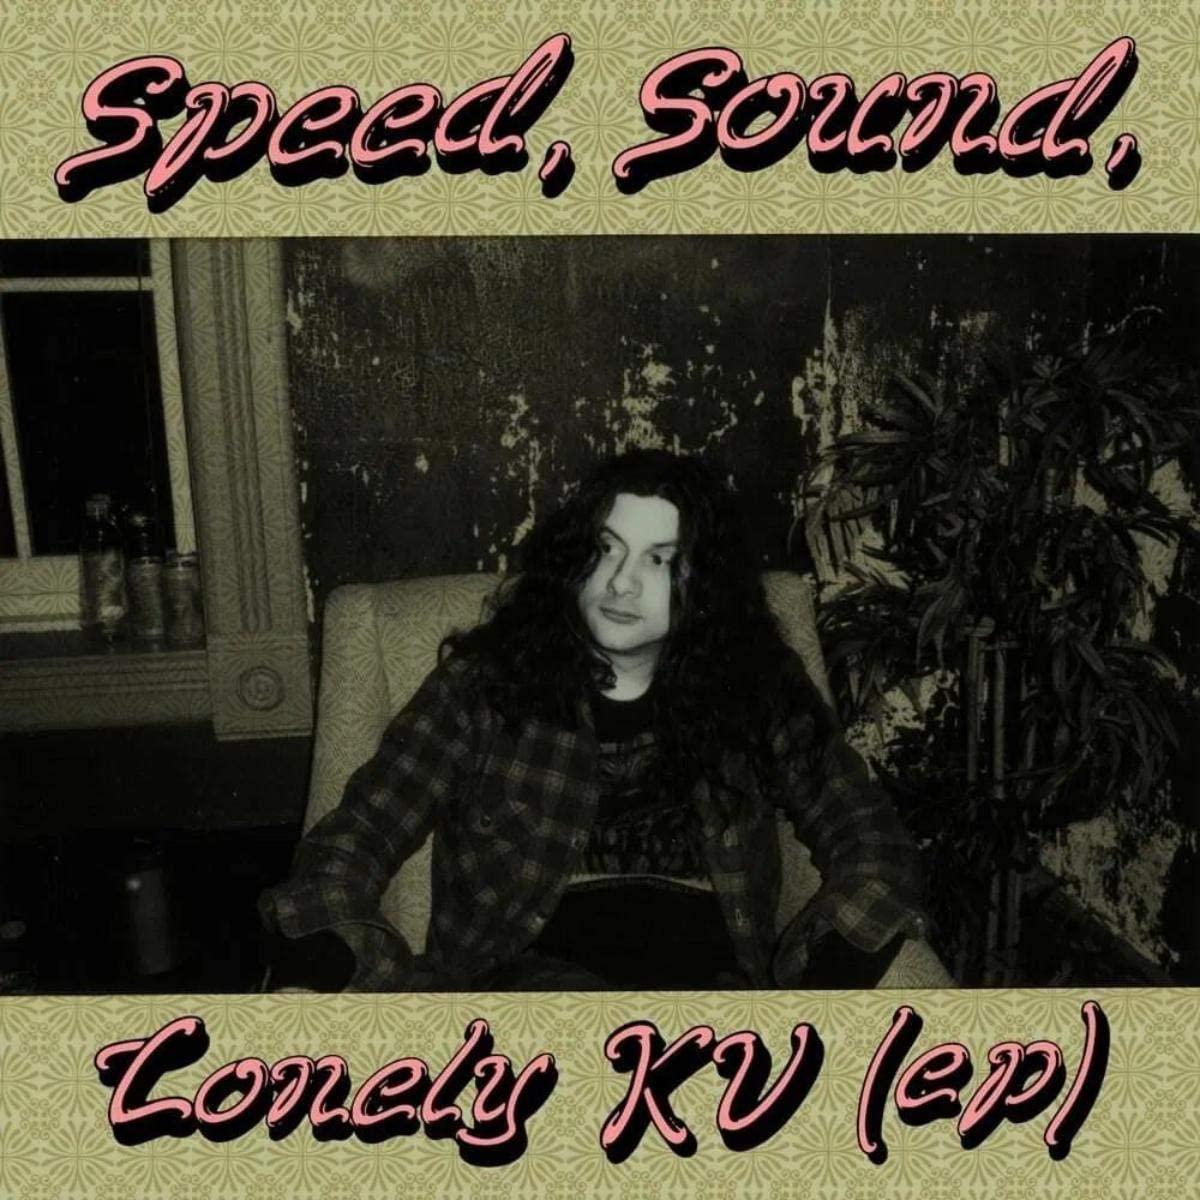 KURT VILE - SPEED, SOUND, LONELY KV (EP) (2020) EP